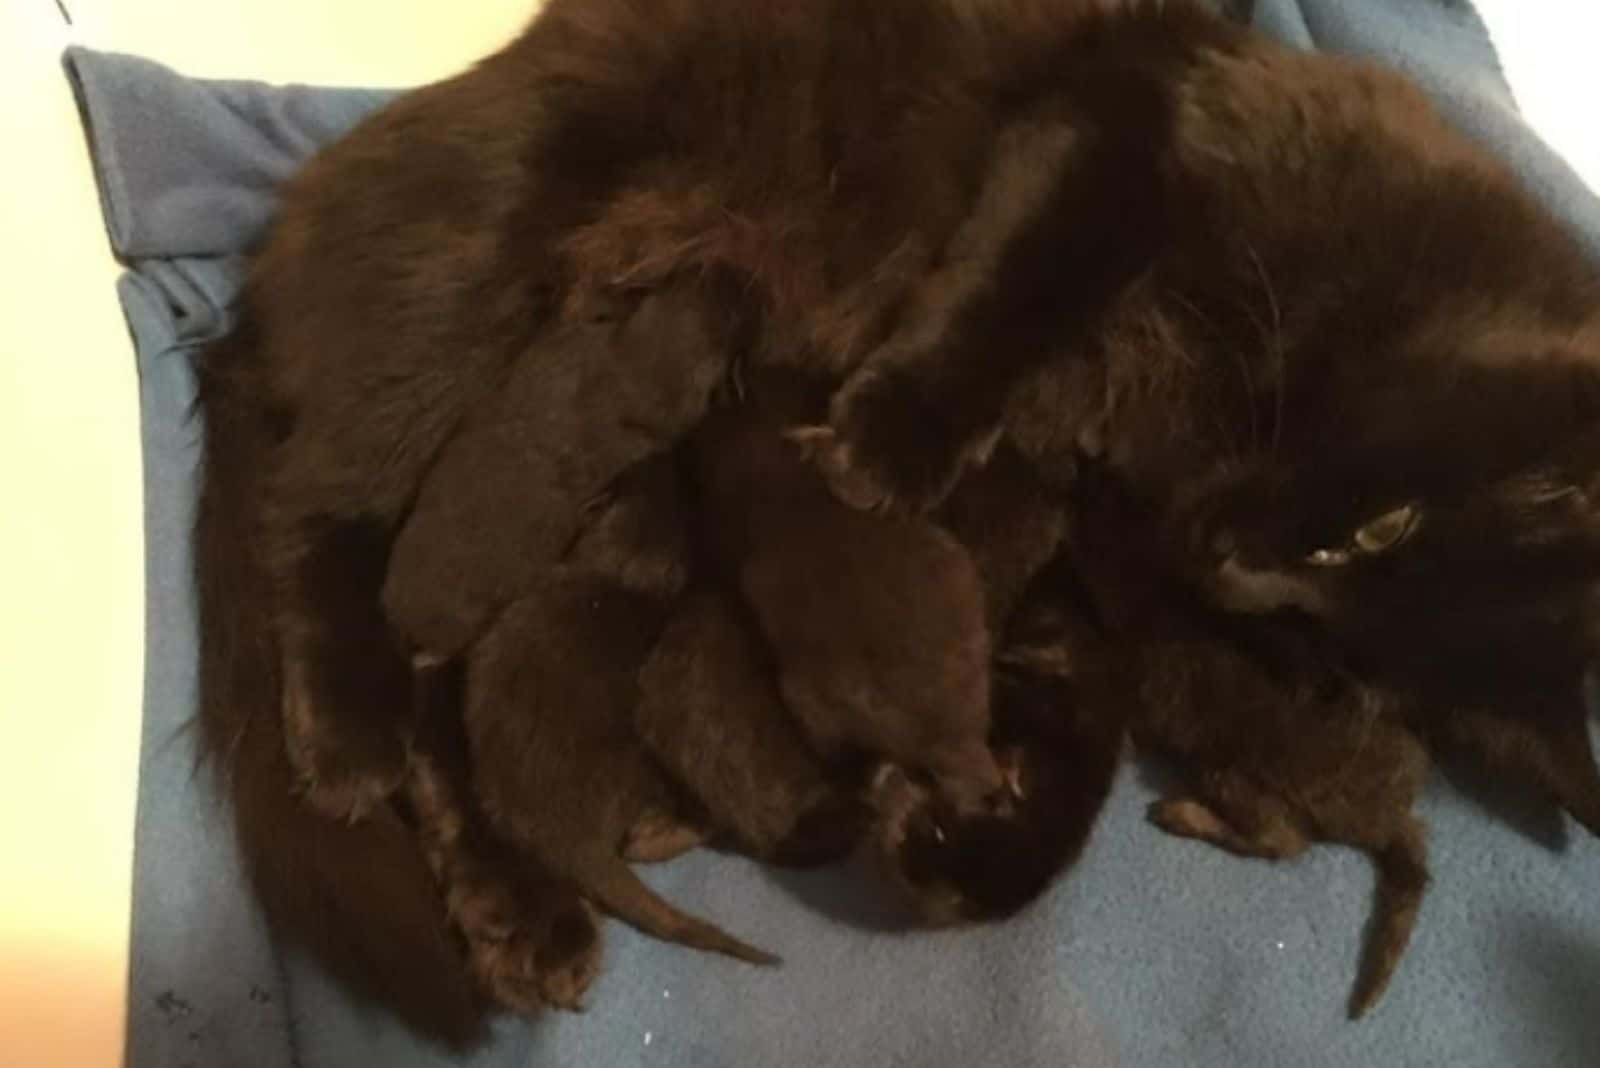 black kittens suckling their mother